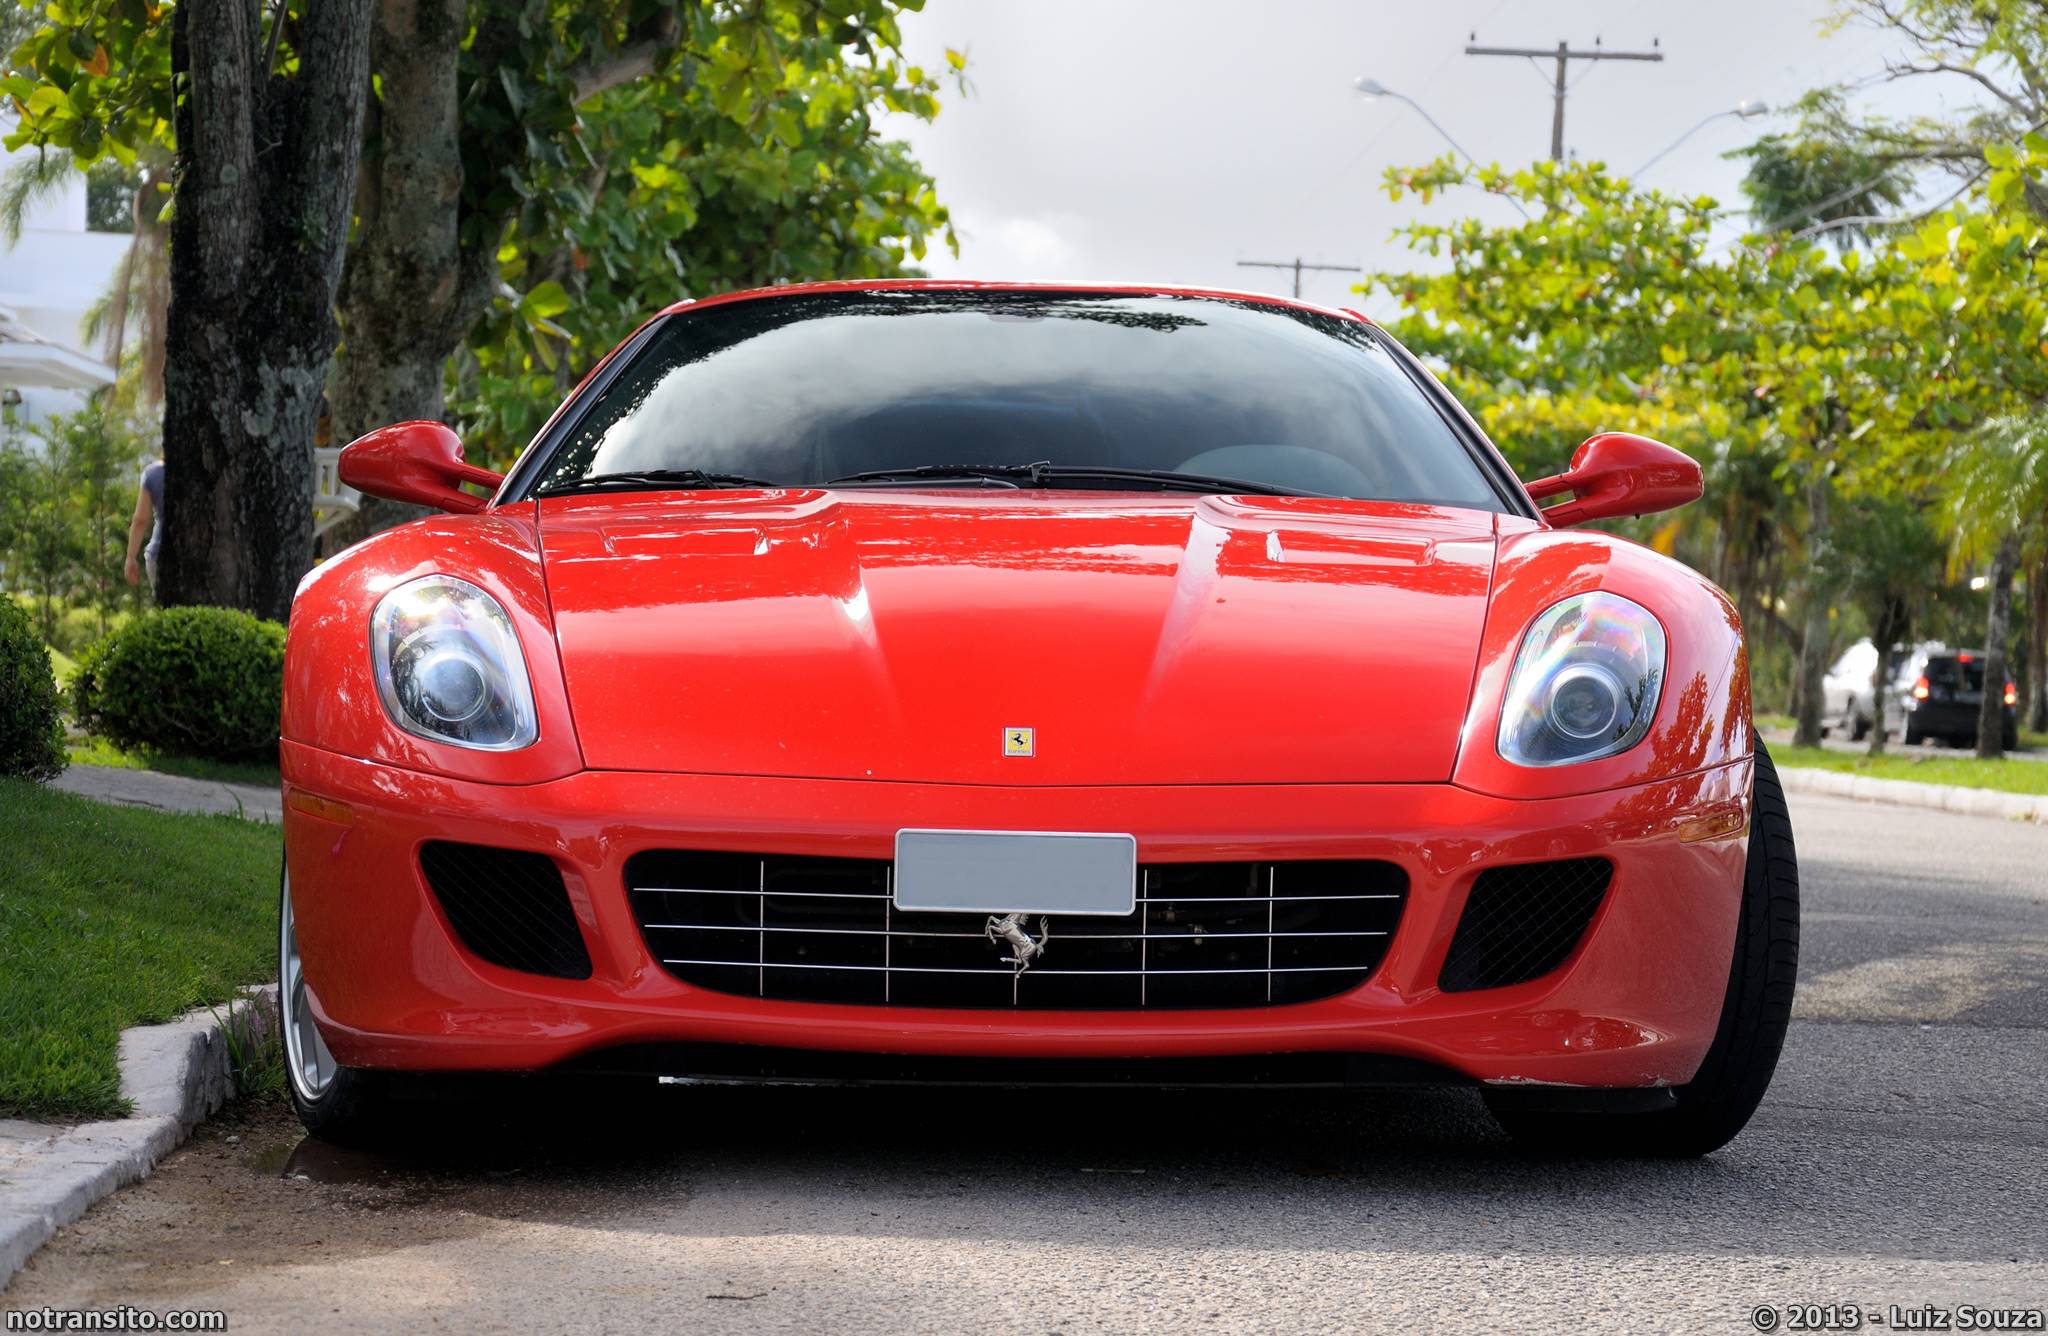 Ferrari 599 GTB Fiorano, Jurerê Internacional, Supercarros em Jurerê Internacional, Exóticos em Jurerê Internacional